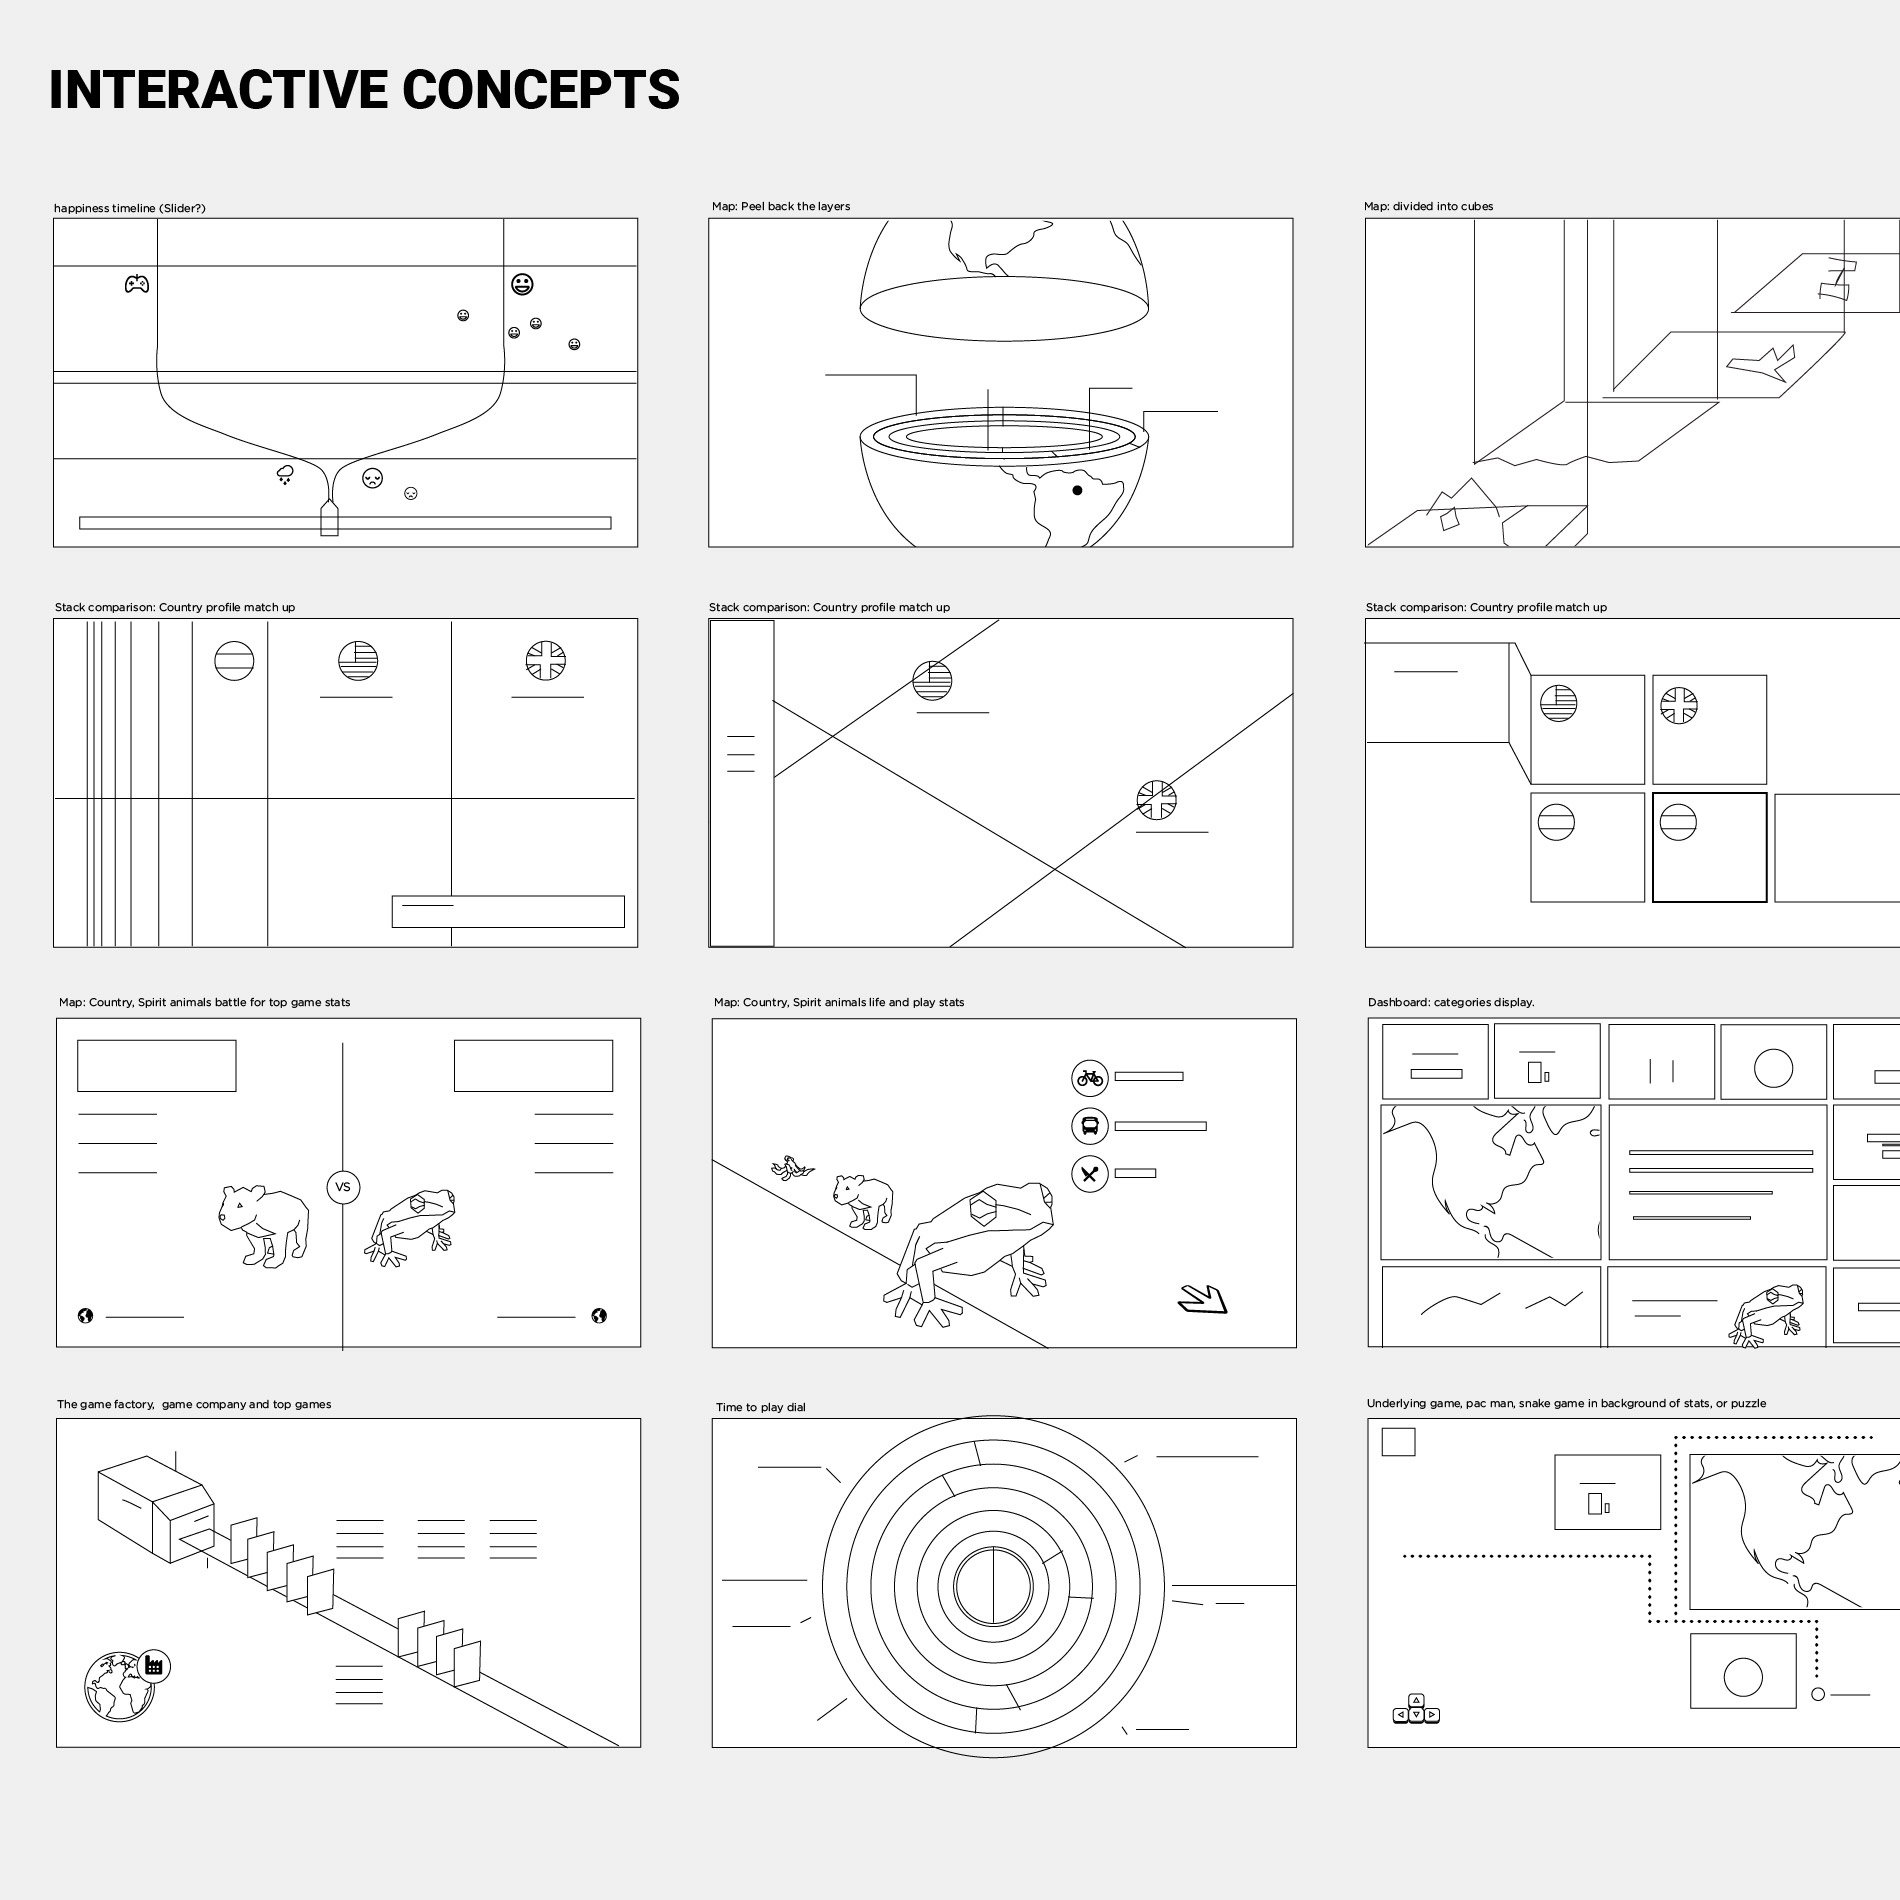 Google Play Interactive Concepts